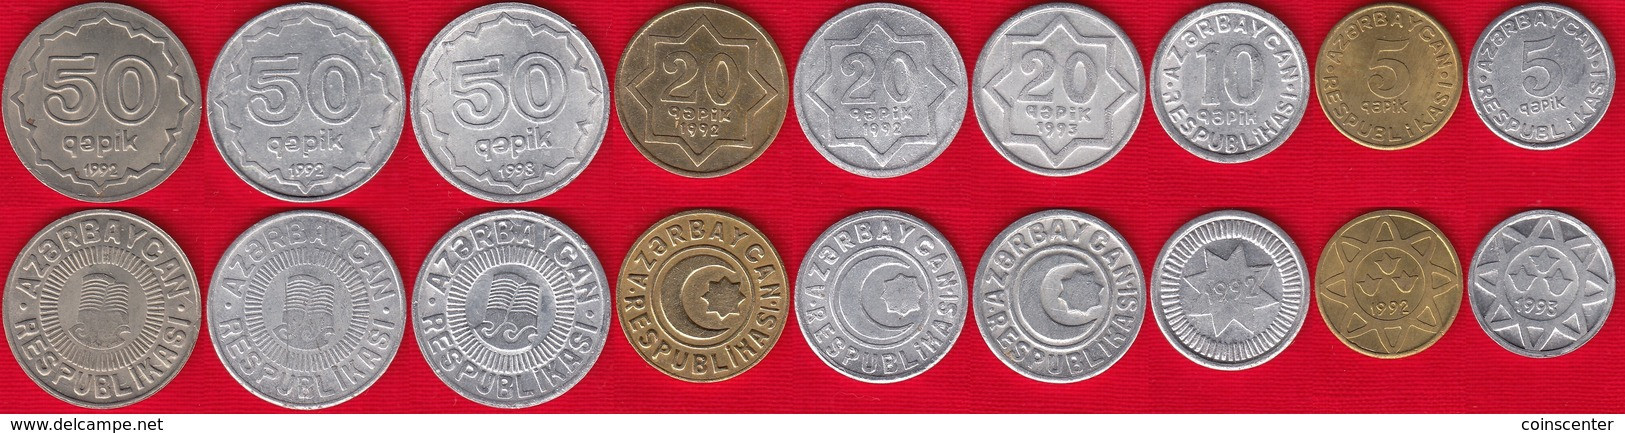 Azerbaijan Set Of 9 Coins: 5 - 50 Qəpik (qapik) 1992-1993 XF-UNC - Azerbaigian